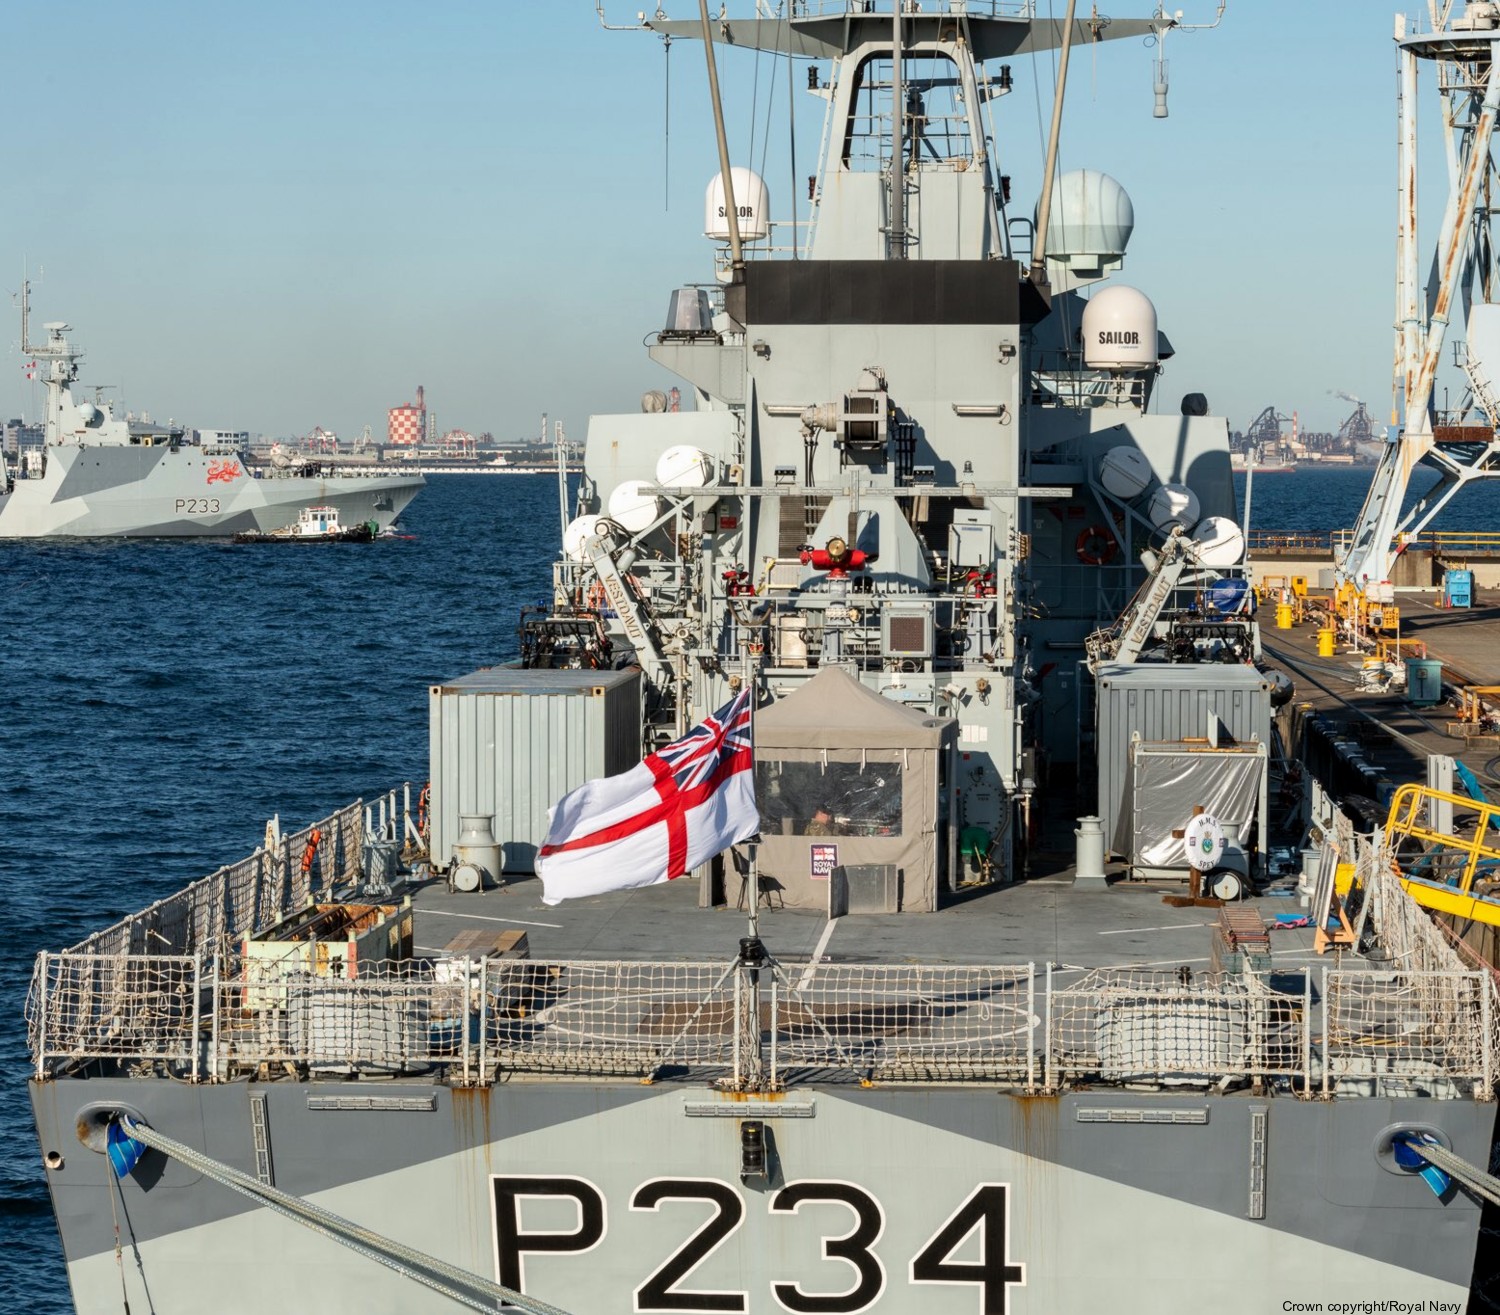 p234 hms spey river class offshore patrol vessel opv royal navy 35